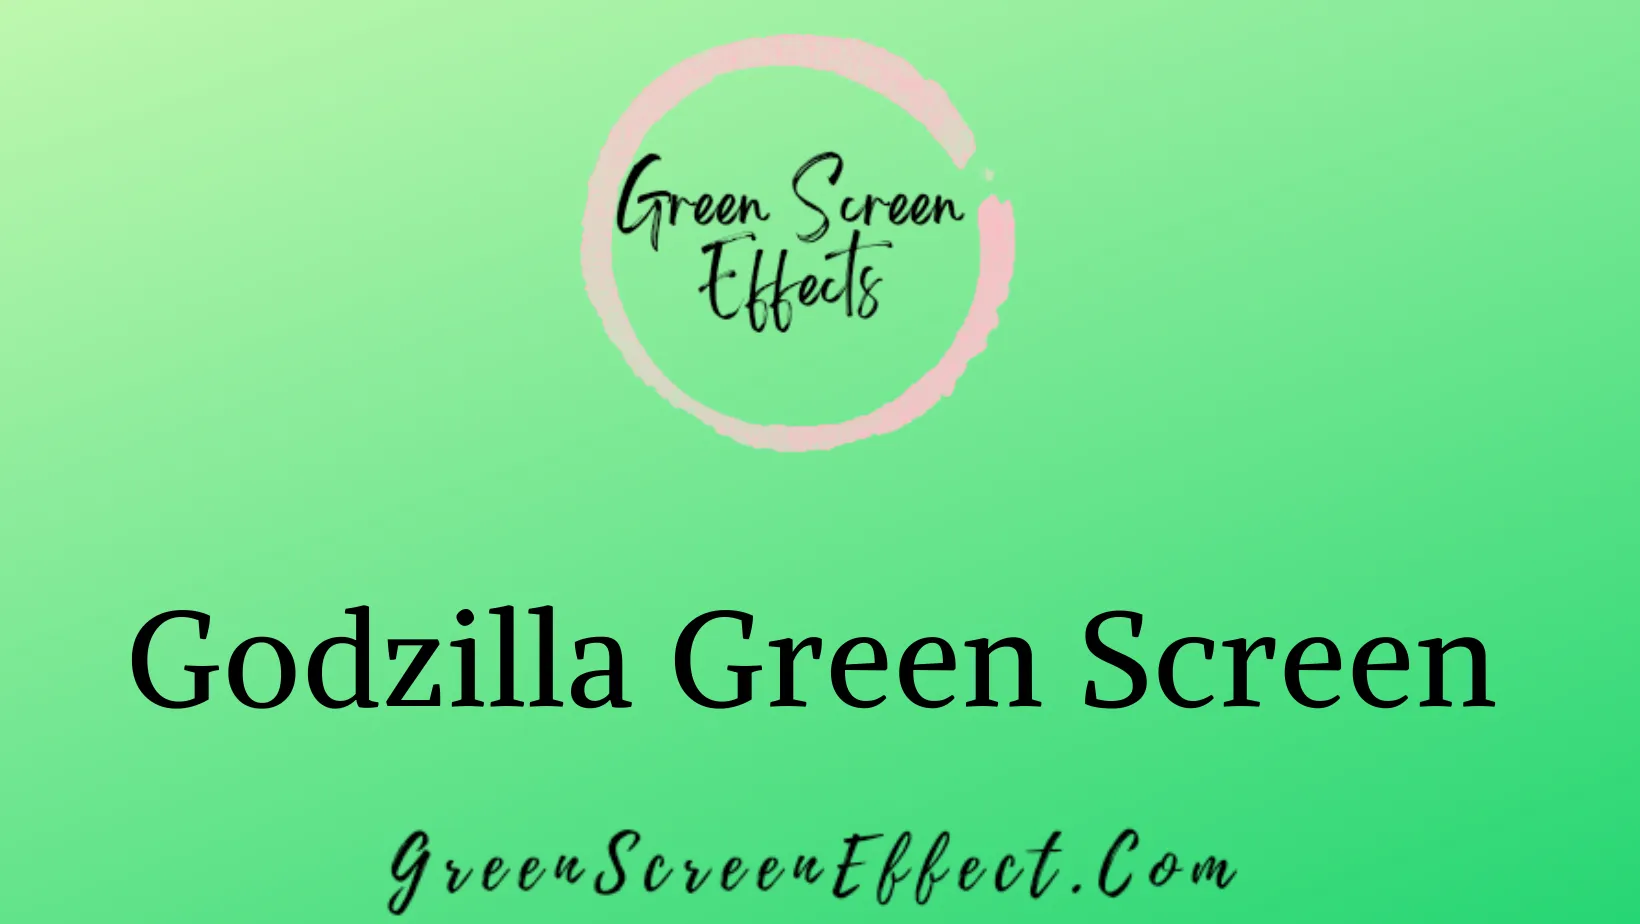 Godzilla Green Screen